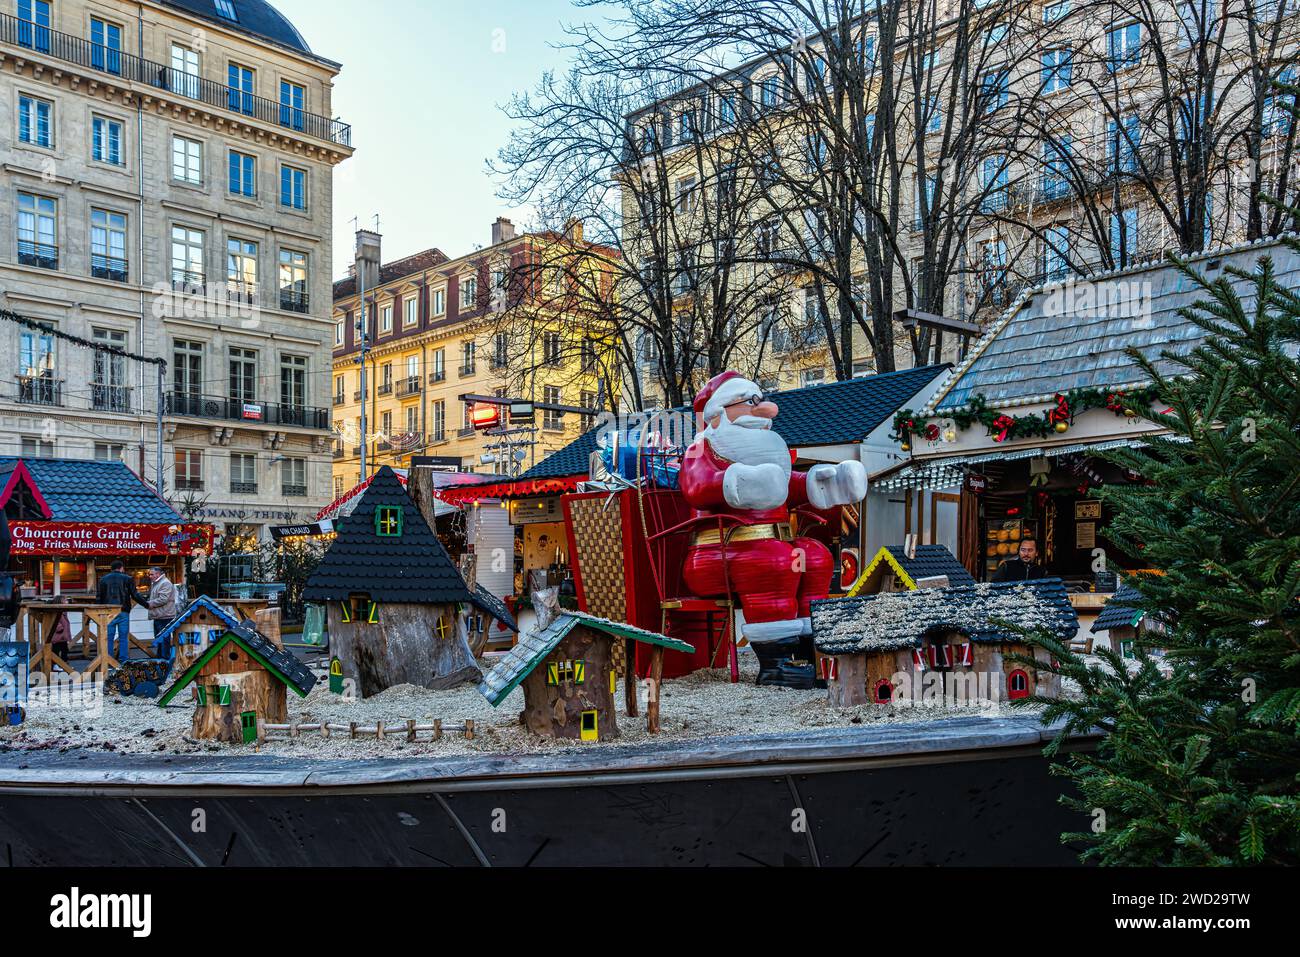 Villaggio di Babbo Natale al mercatino di Natale di Saint-Etienne in Place de l'Hotel de Ville. Saint-Étienne, Auvergne-Rhône-Alpes, Francia Foto Stock